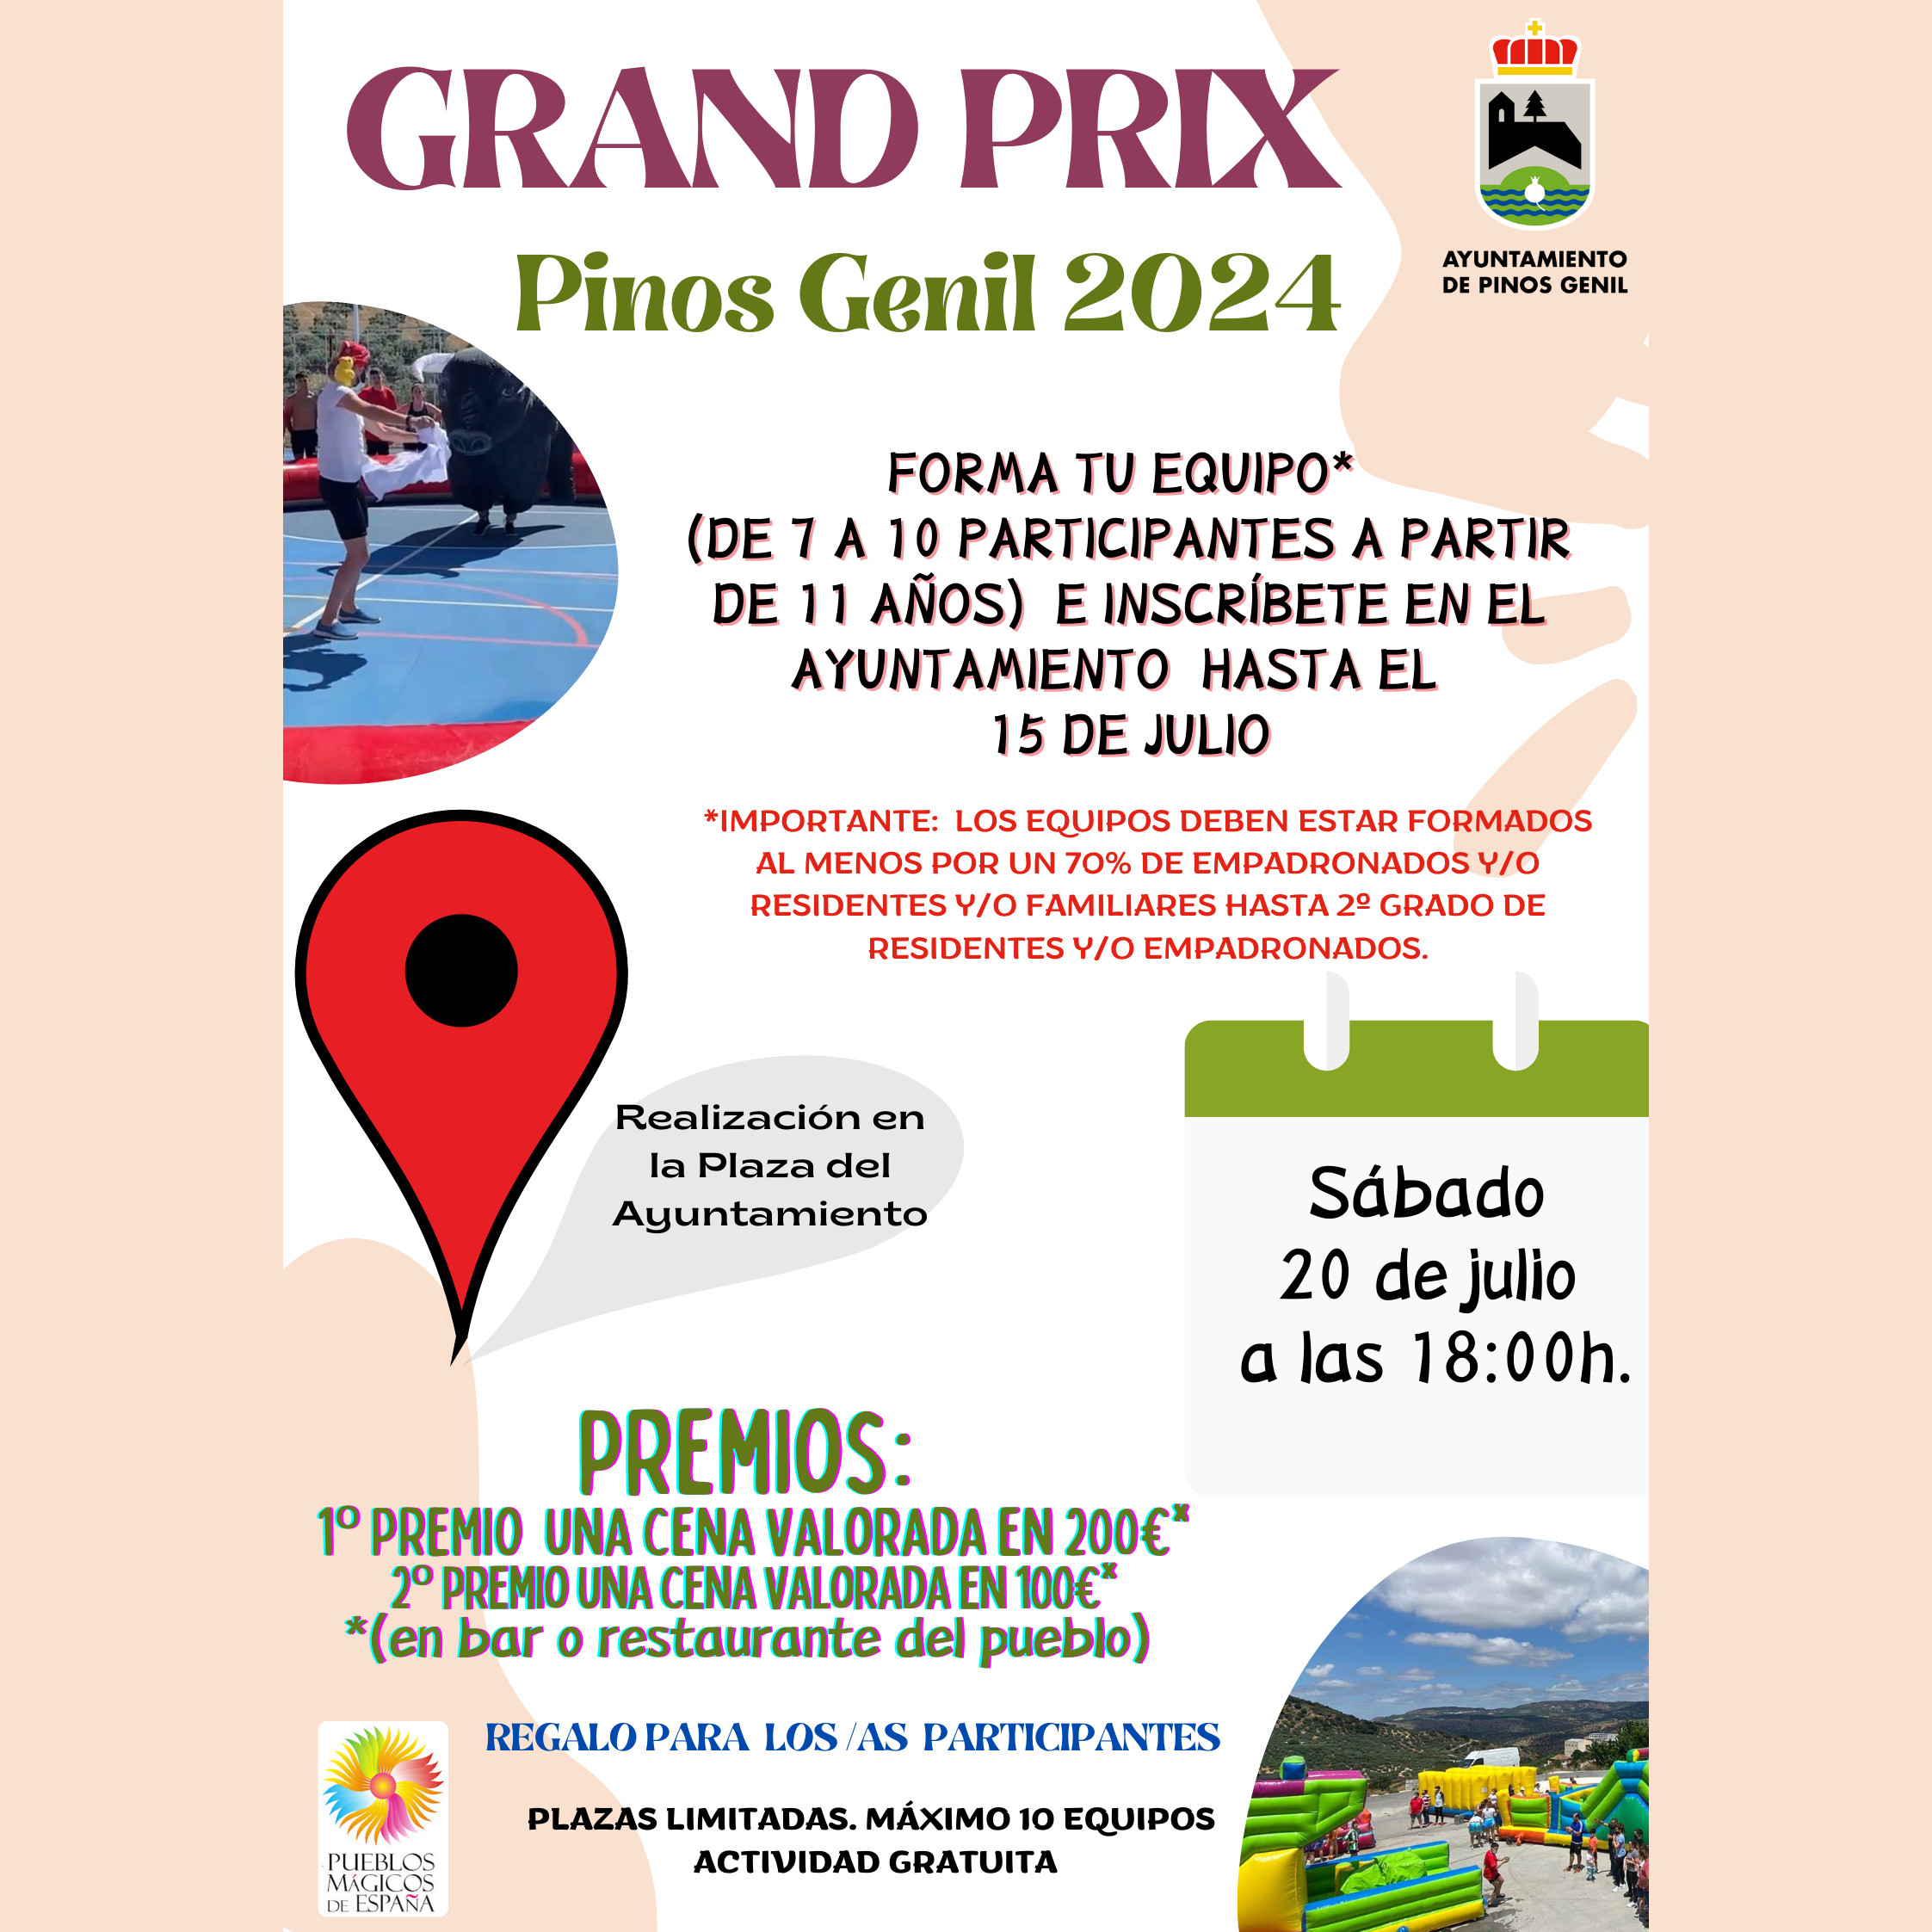 Grand Prix Pinos Genil 2024